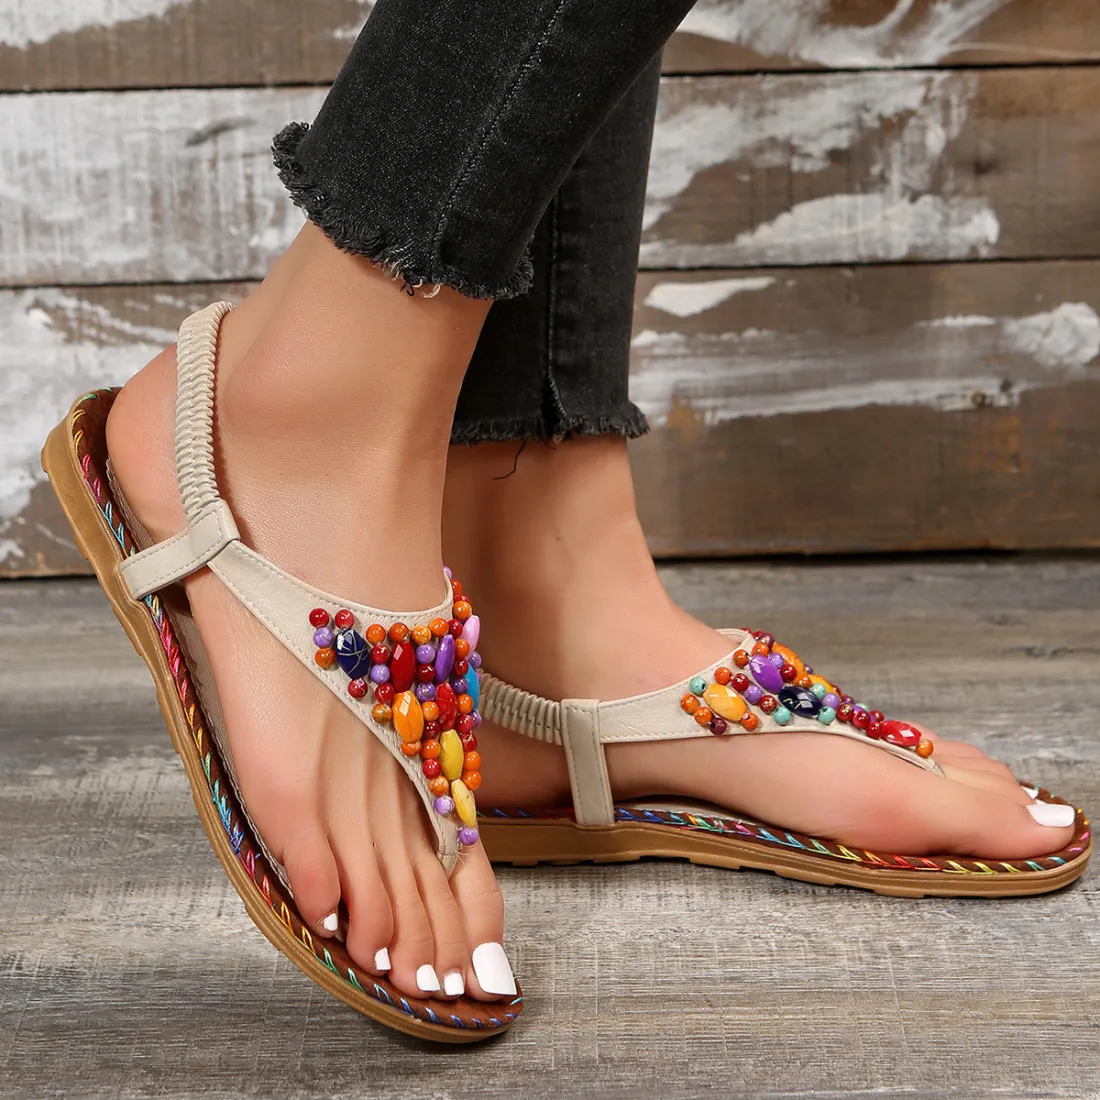 36 Pairs Ladies' Fashion Sandals Assorted Colors Size 6-11 - Women's Flip  Flops - at 